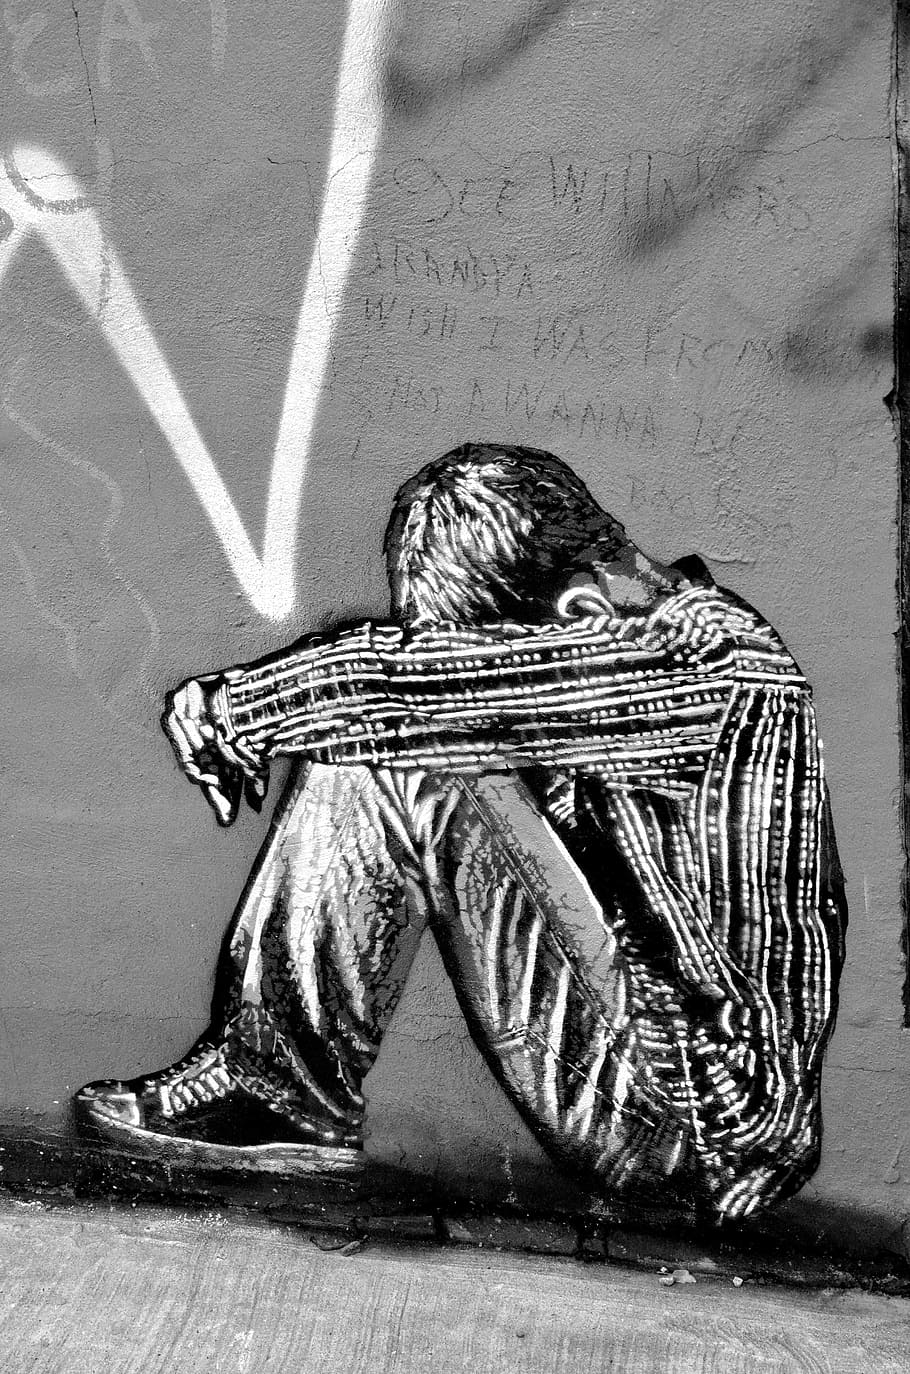 boy painted on wall, street art, graffiti, new york, spray, emotion